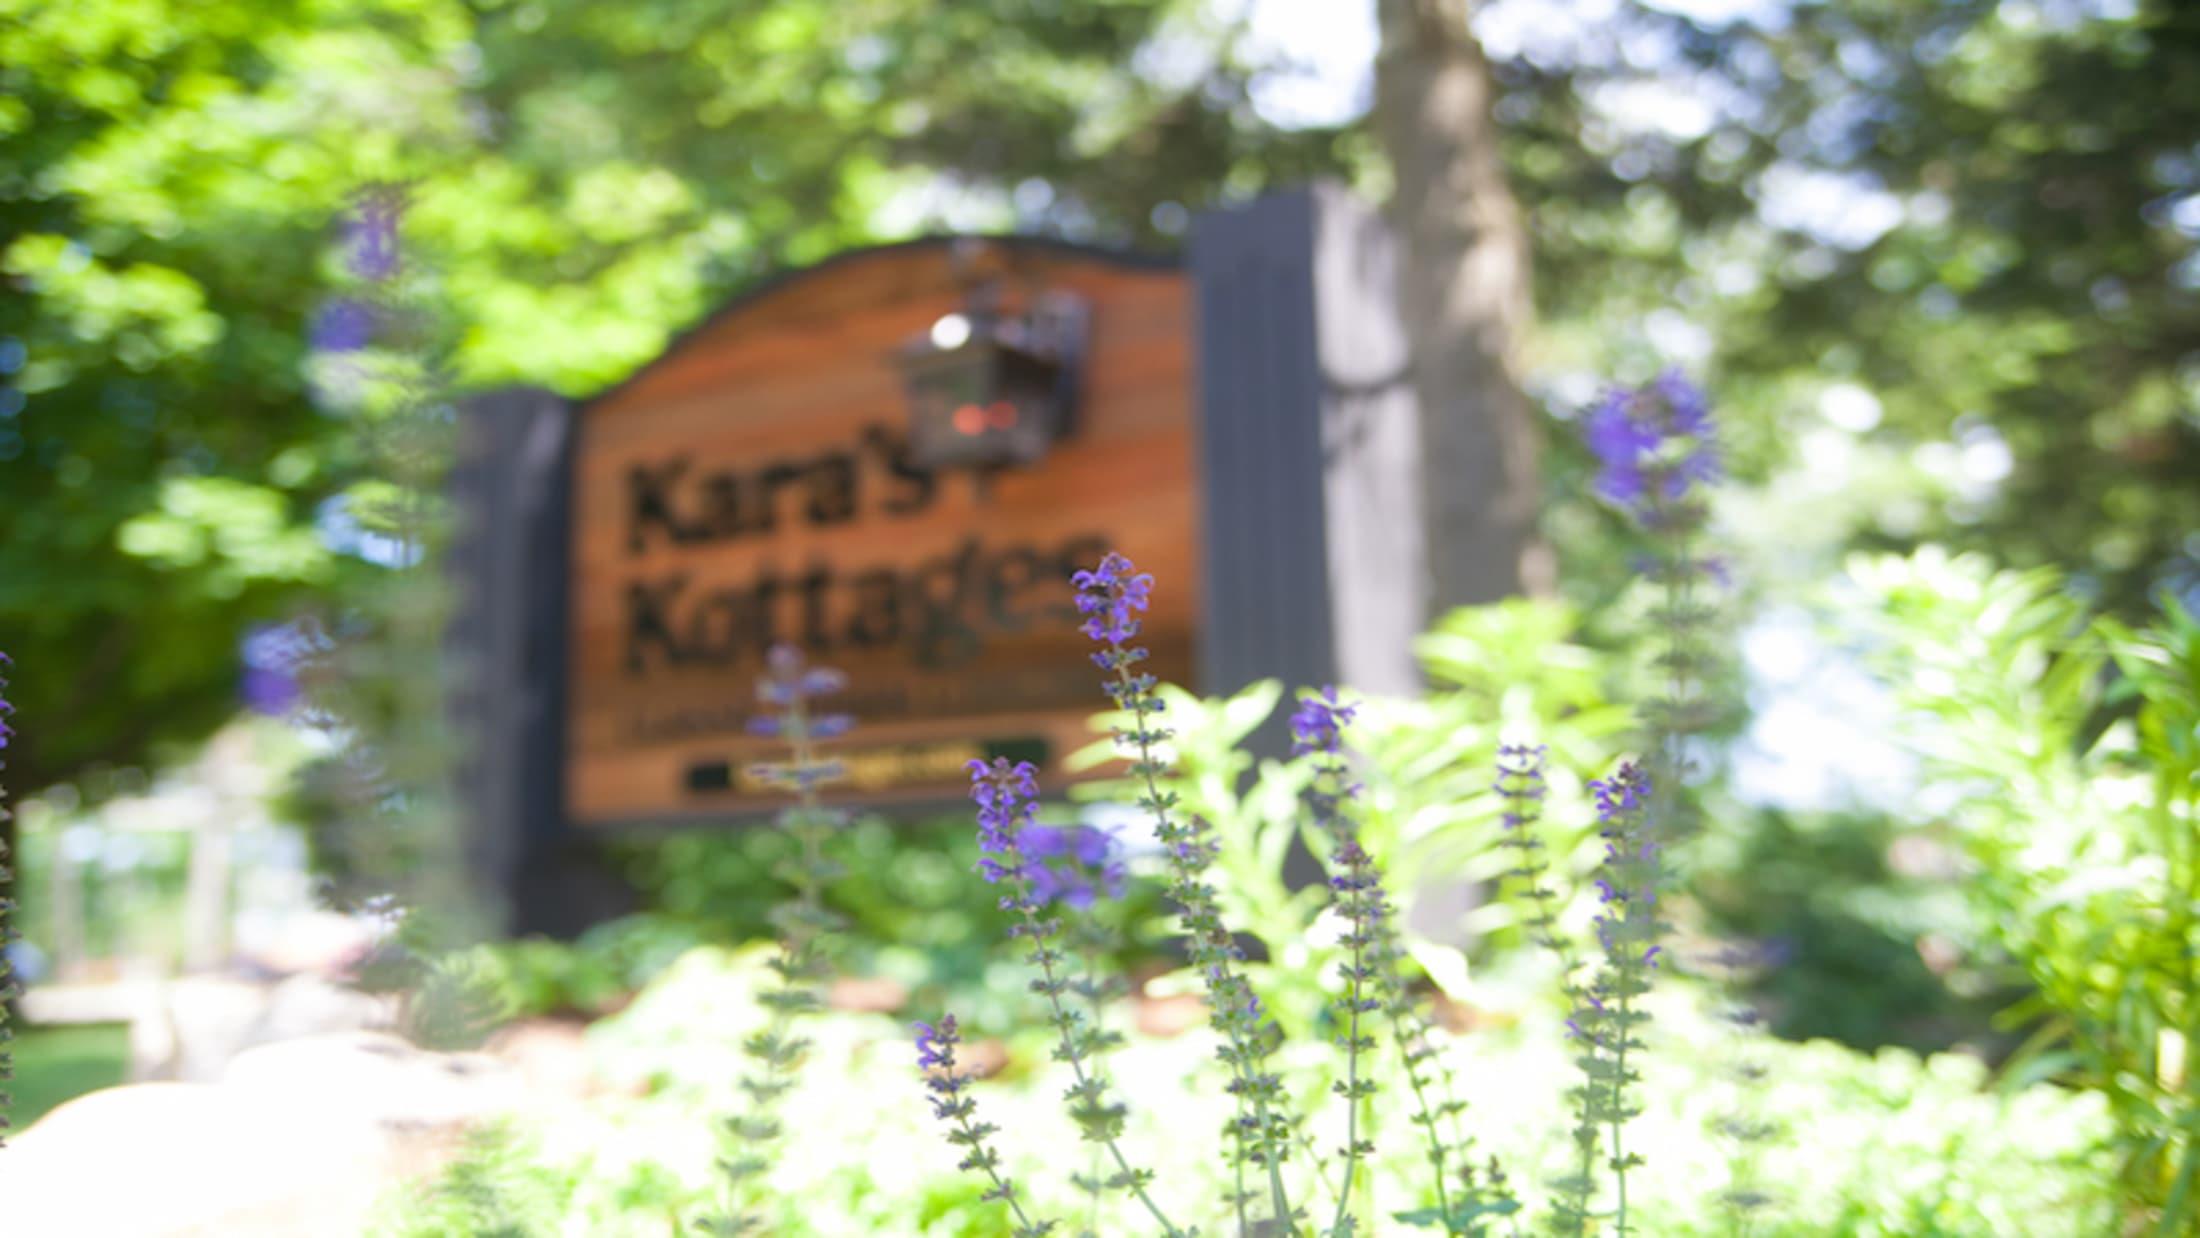 purple-flowers-in-front-of-Kara's-Kottages-sign.jpg